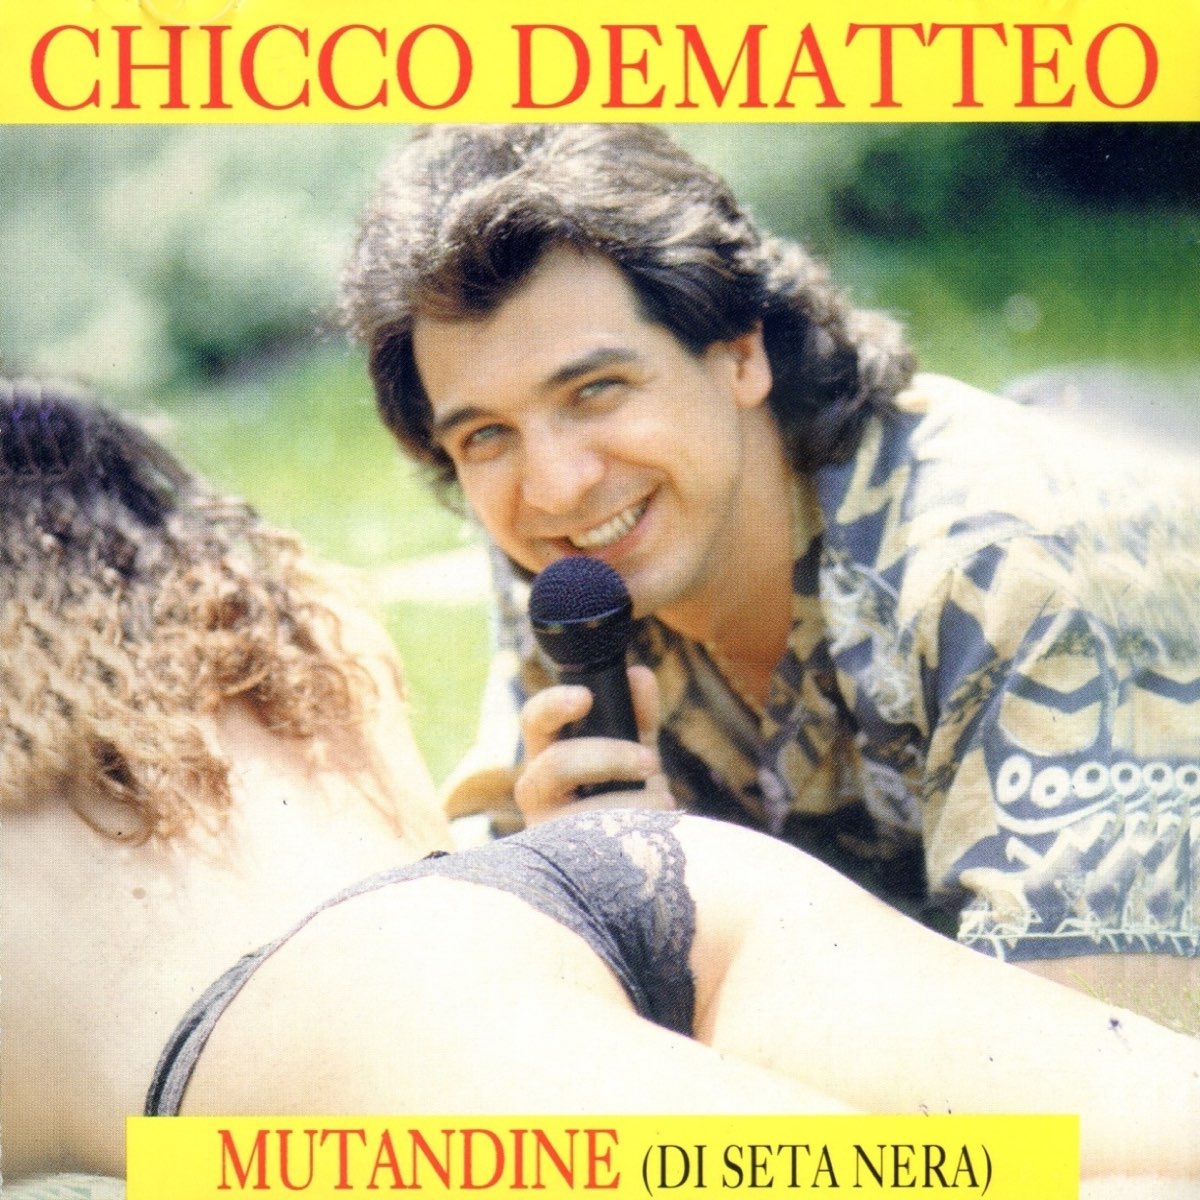 Mutandine (Di sera nera) - Album di Chicco De Matteo - Apple Music